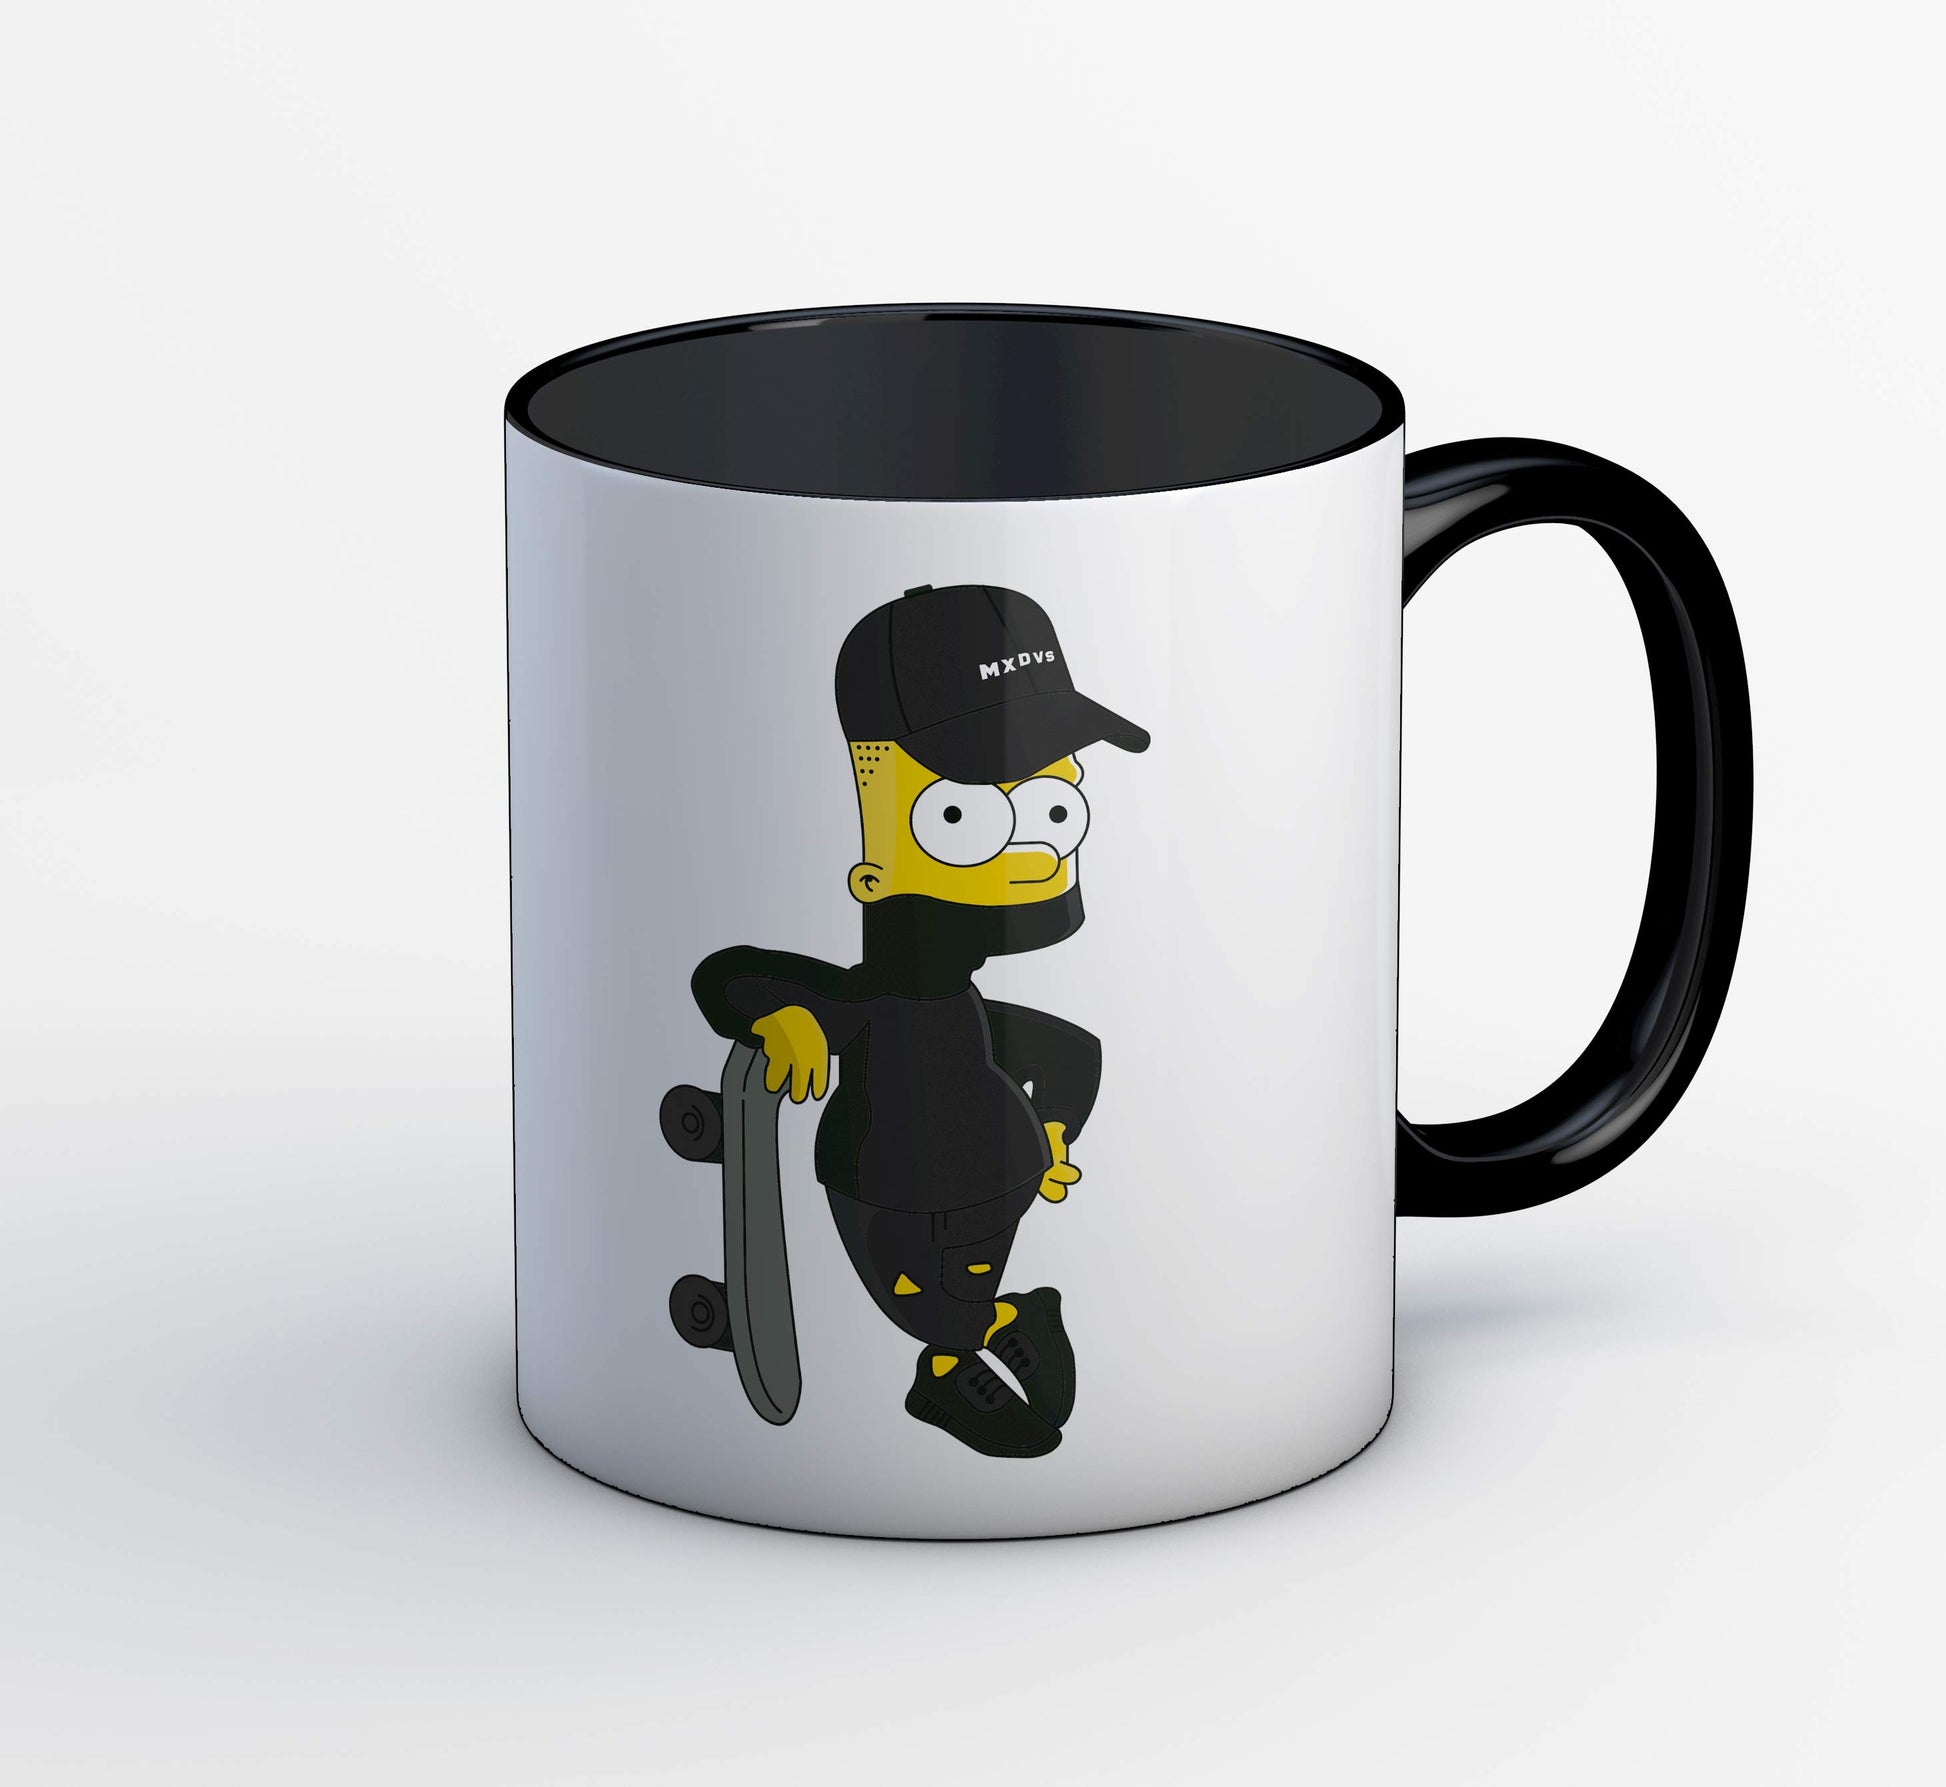 The Simpsons Mug Coffee Mug Ceramic Mug by The Banyan Tee